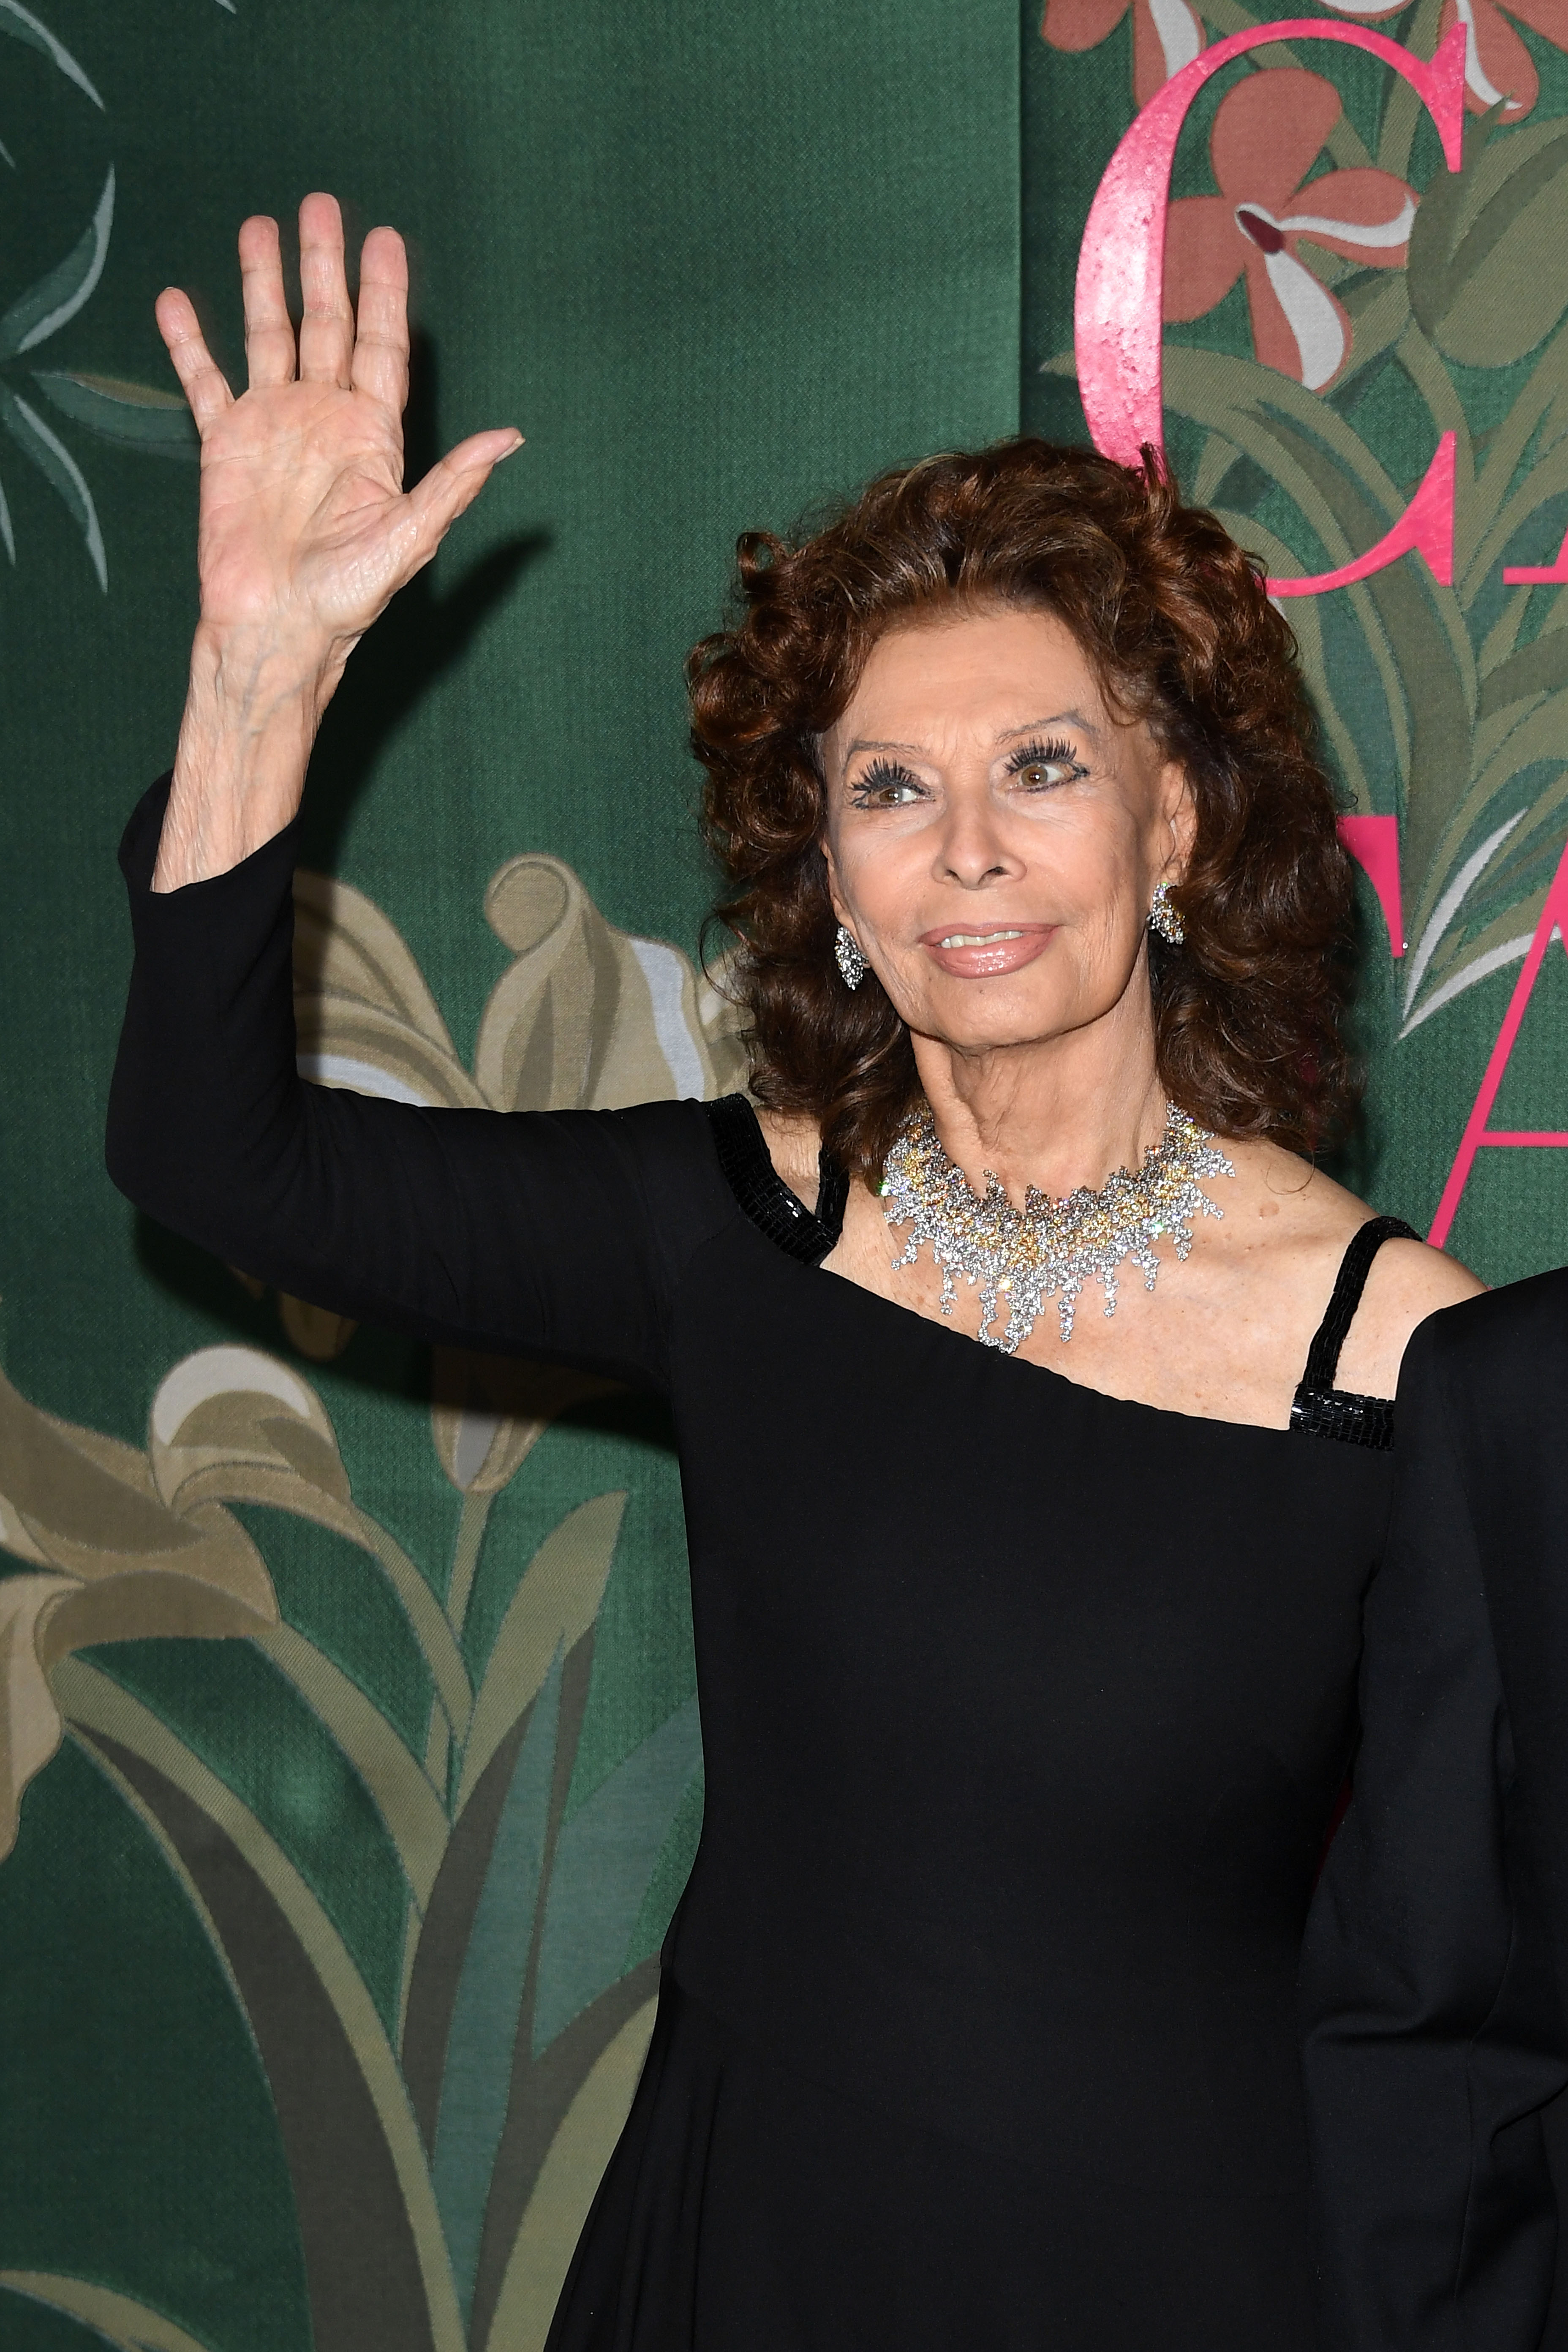 Sophia Loren at the Milan Fashion Week Spring/Summer 2020 in Milan, Italy on September 22, 2019 | Source: Getty Images